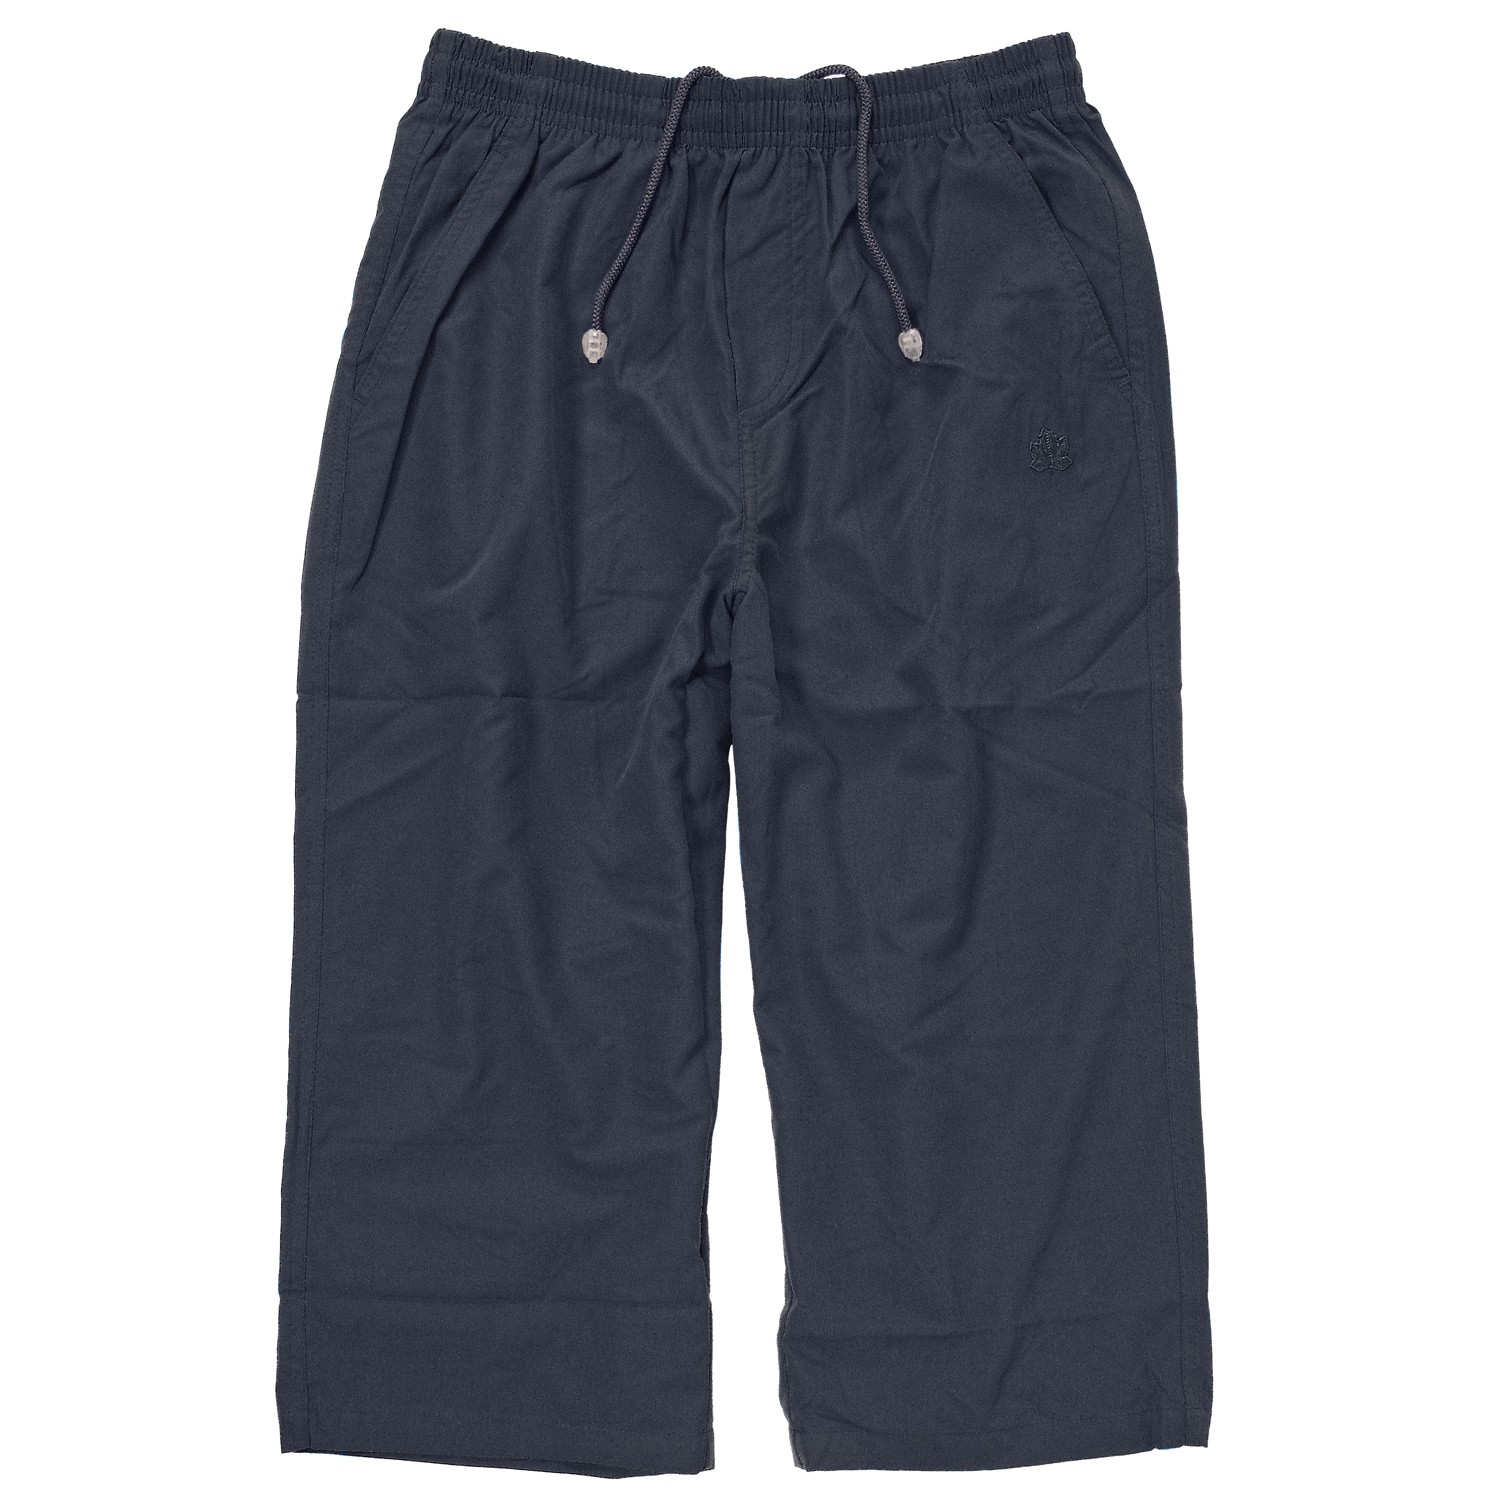 Fitness capri pants 3/4 long in dark blue by Ahorn Sportswear in oversizes up to 10XL